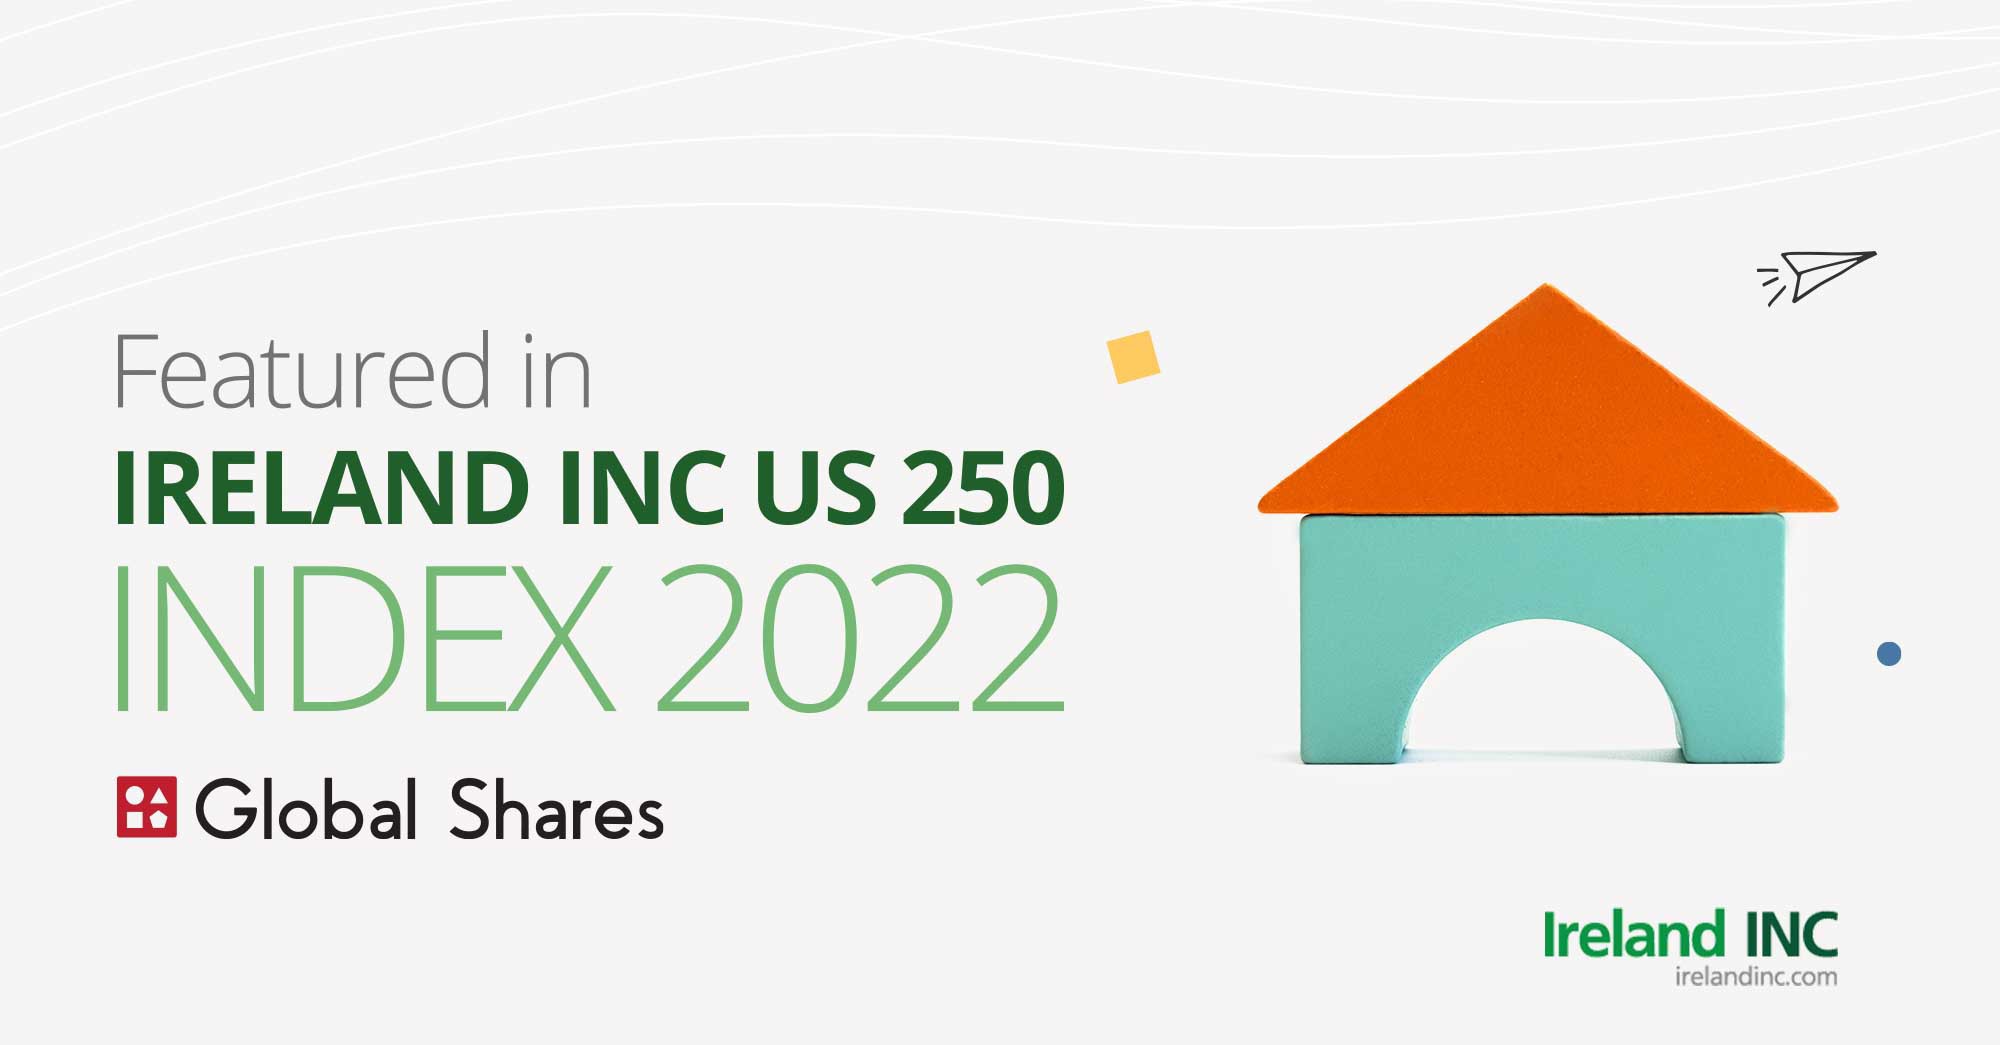 We’re on the Ireland INC US 250 Index 2022